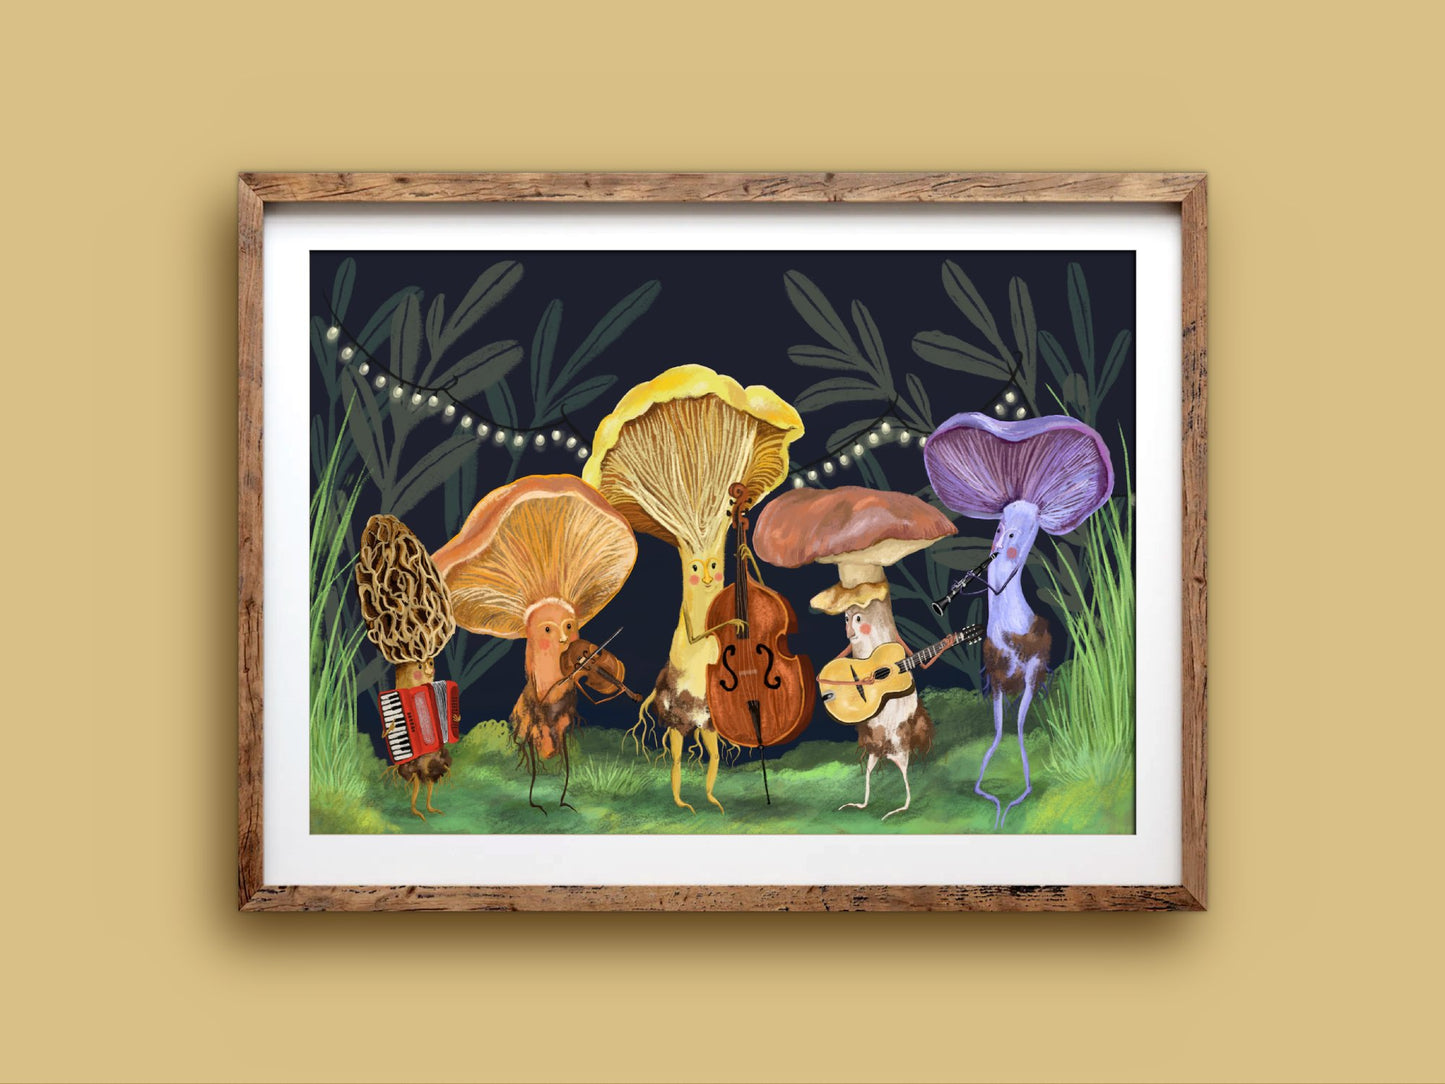 Anna Seed Art | Art Print - Mushroom Band - Fun illustration, wall art